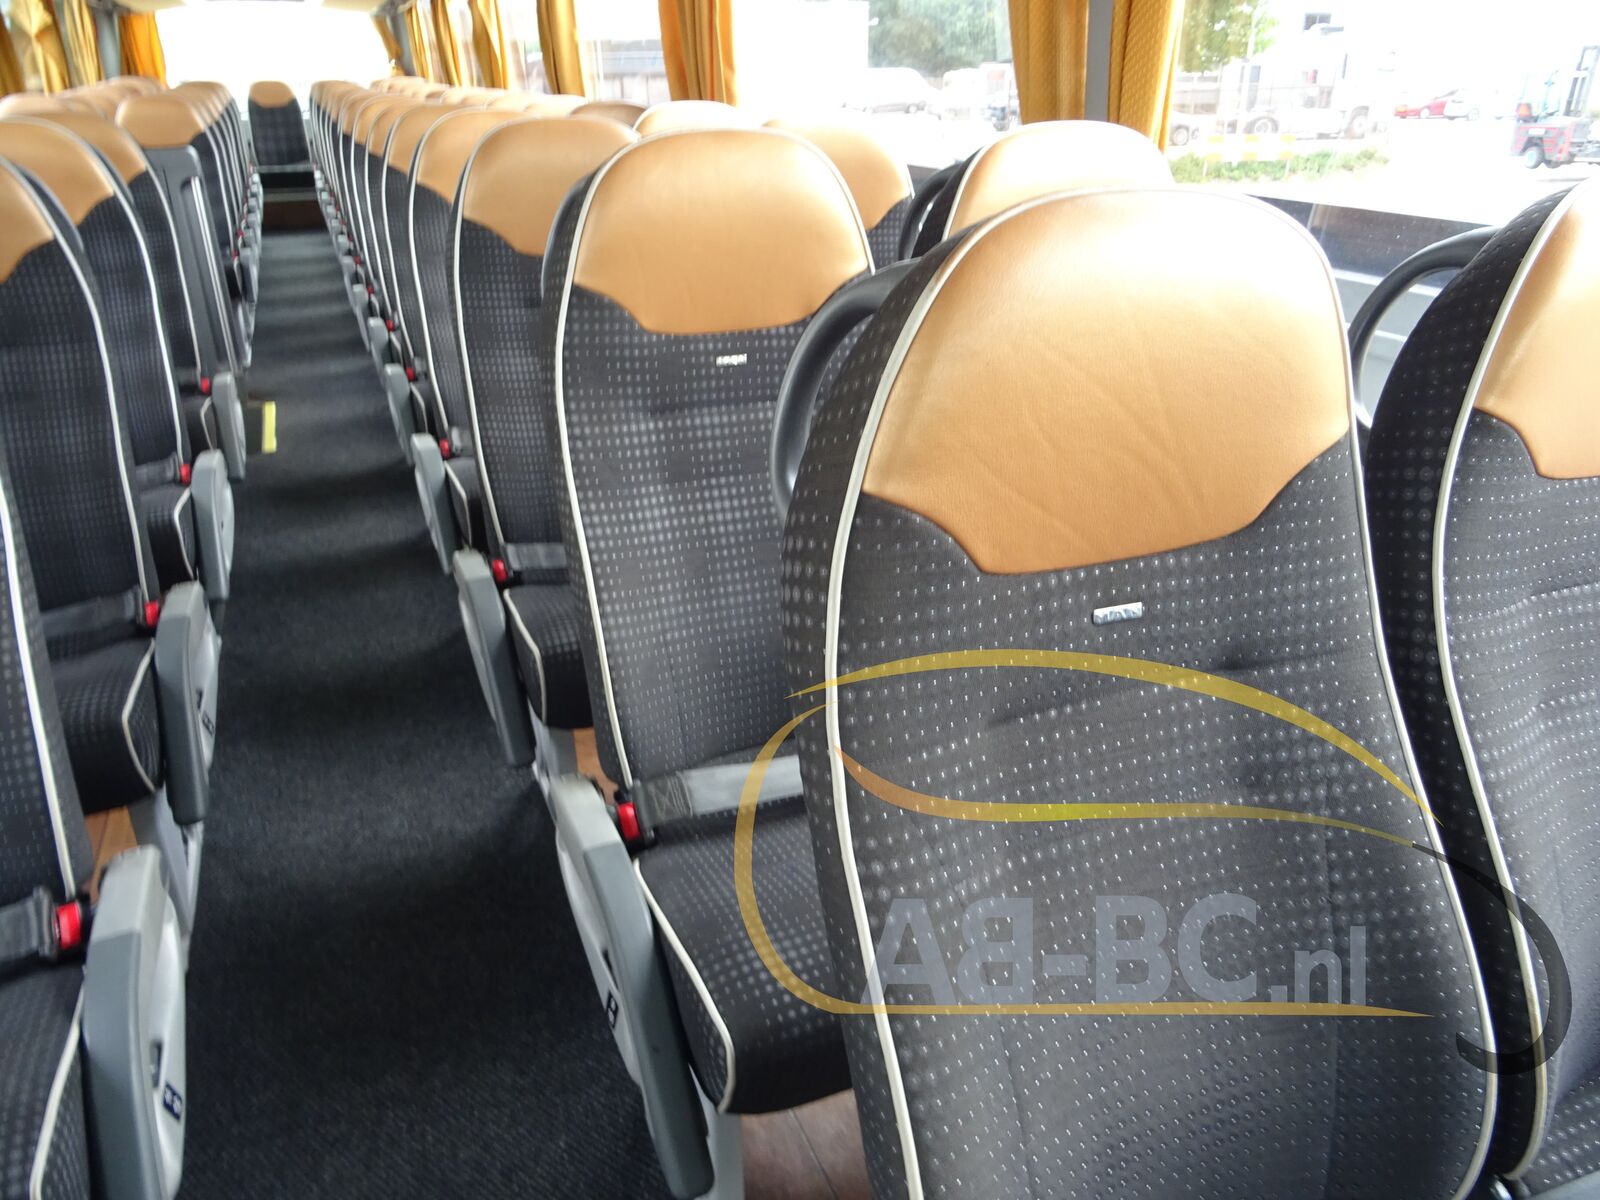 coach-bus-MAN-R08-Lions-Coach-61-Seats-EURO-6---1660558994598616904_orig_4409595552a4c89f4414cc3012204754--22072717304811402900